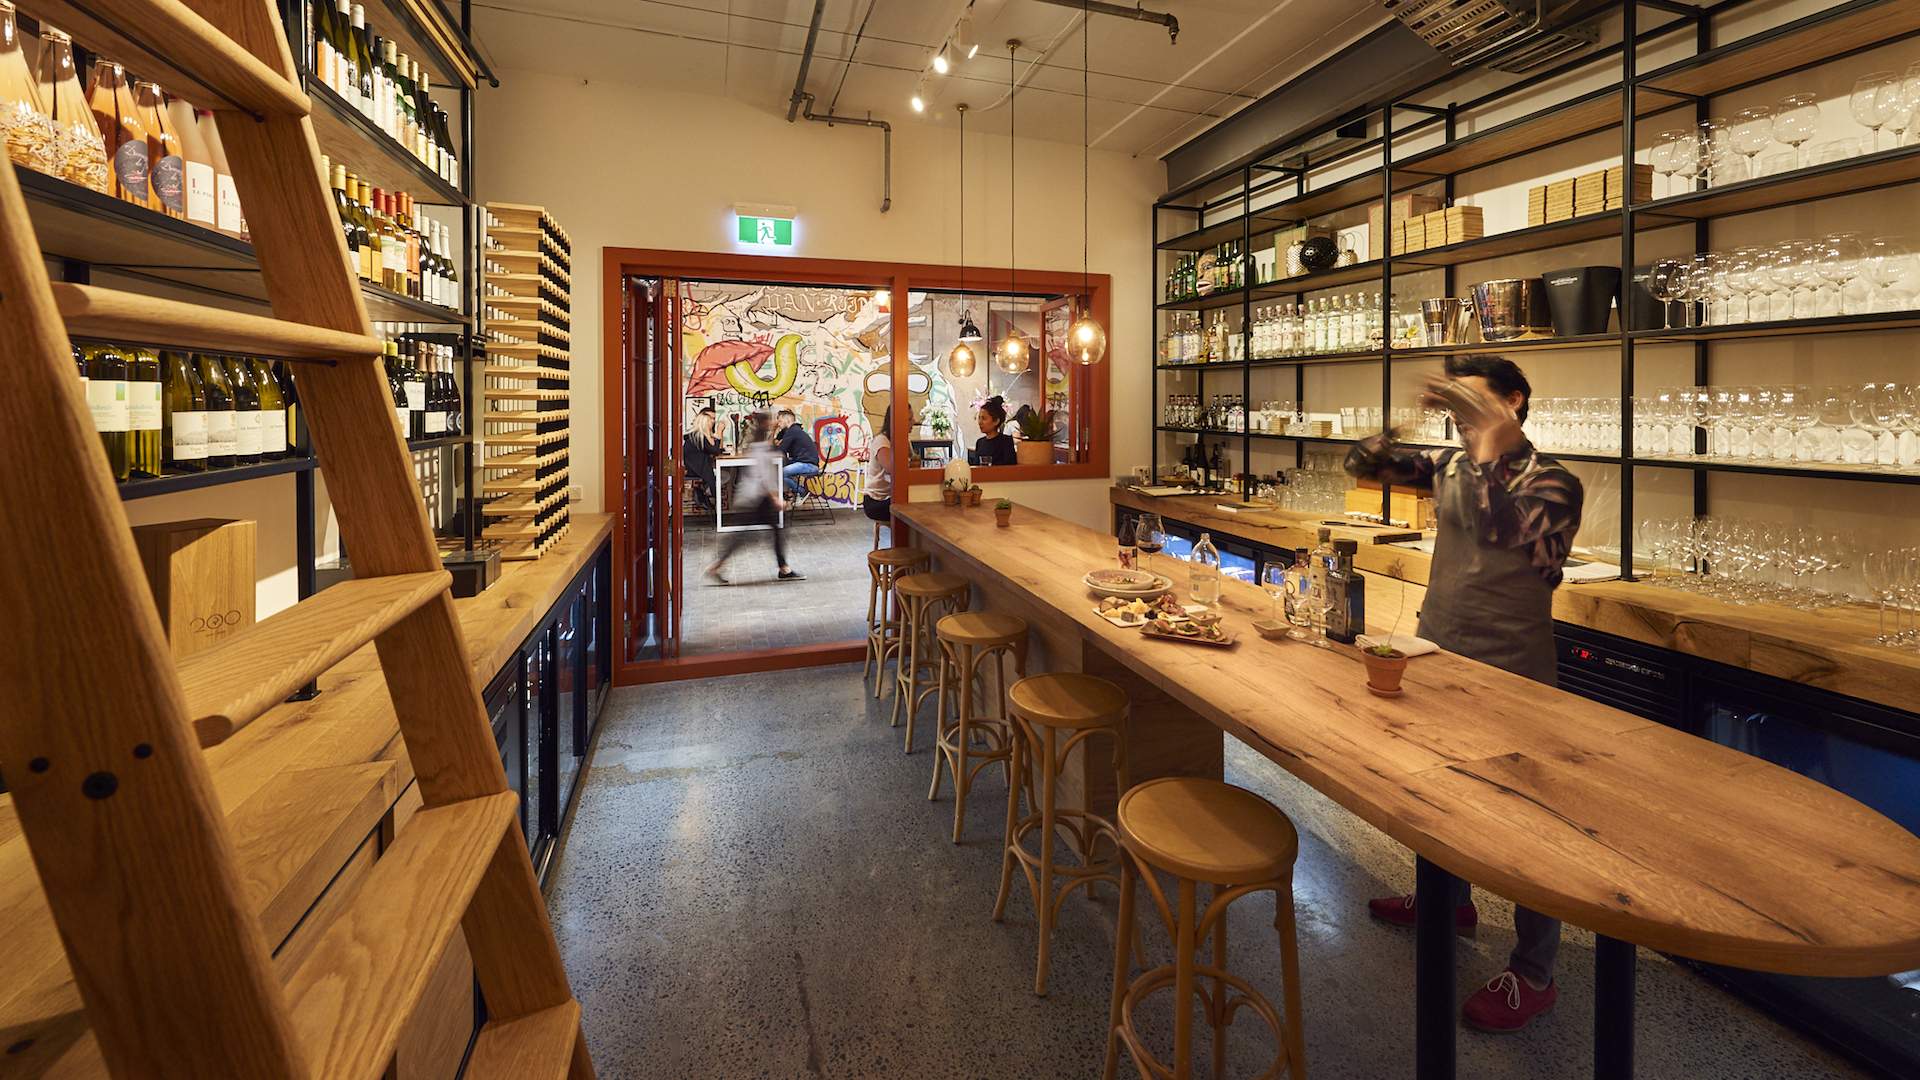 La Fuente Is Auckland's New Wine and Mezcal Bar